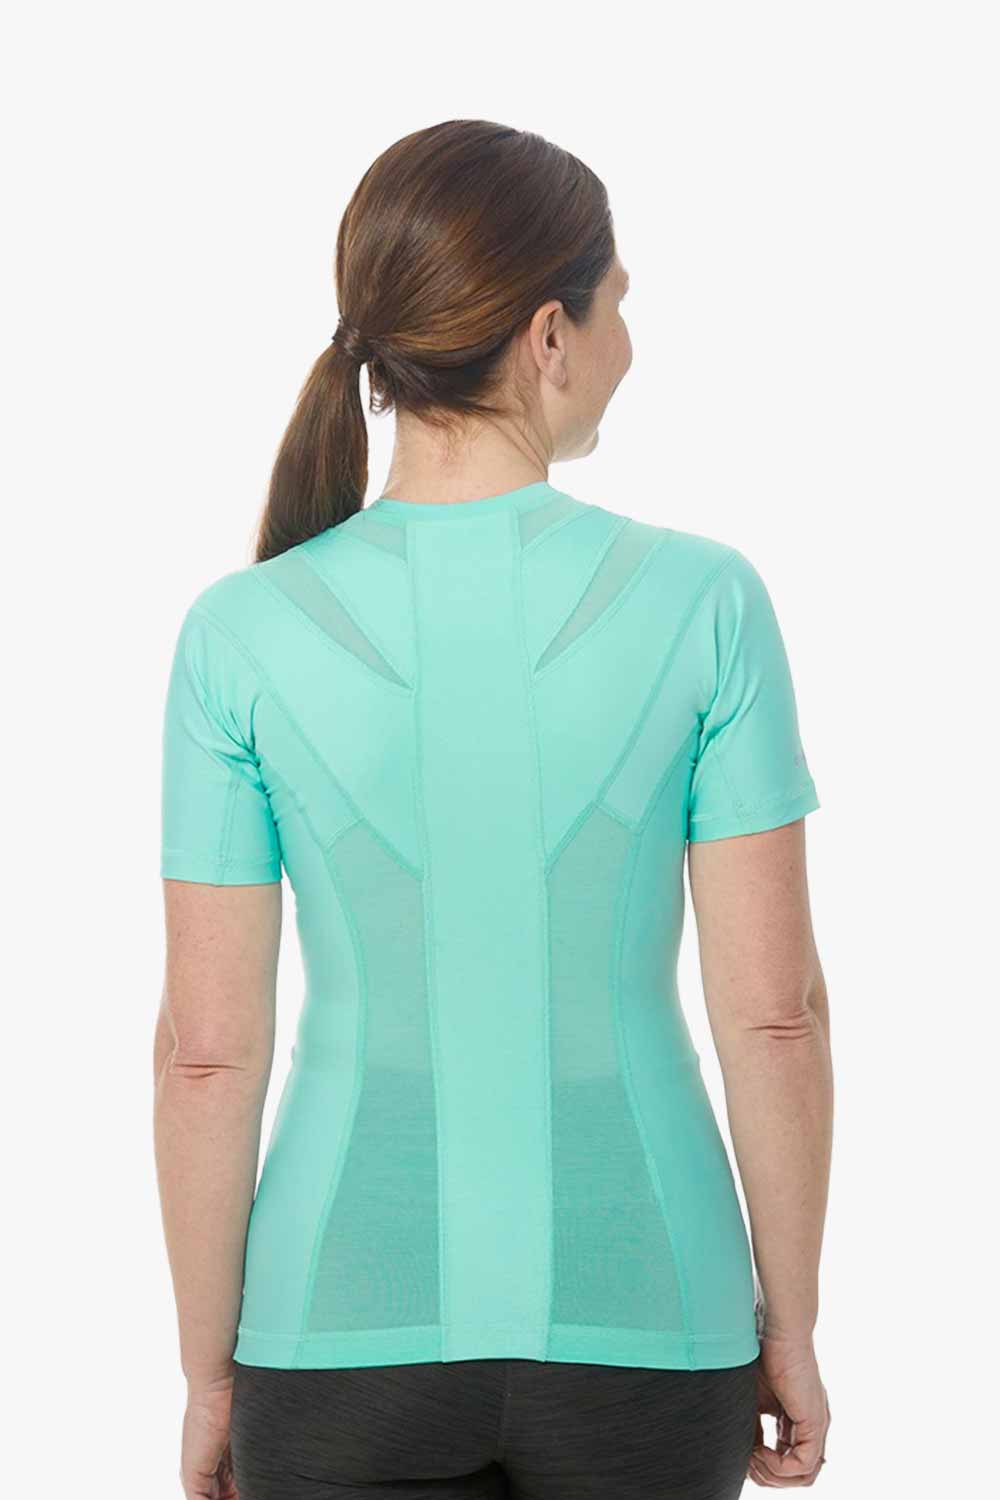 DEMO - Women's Posture Shirt™ - Mint